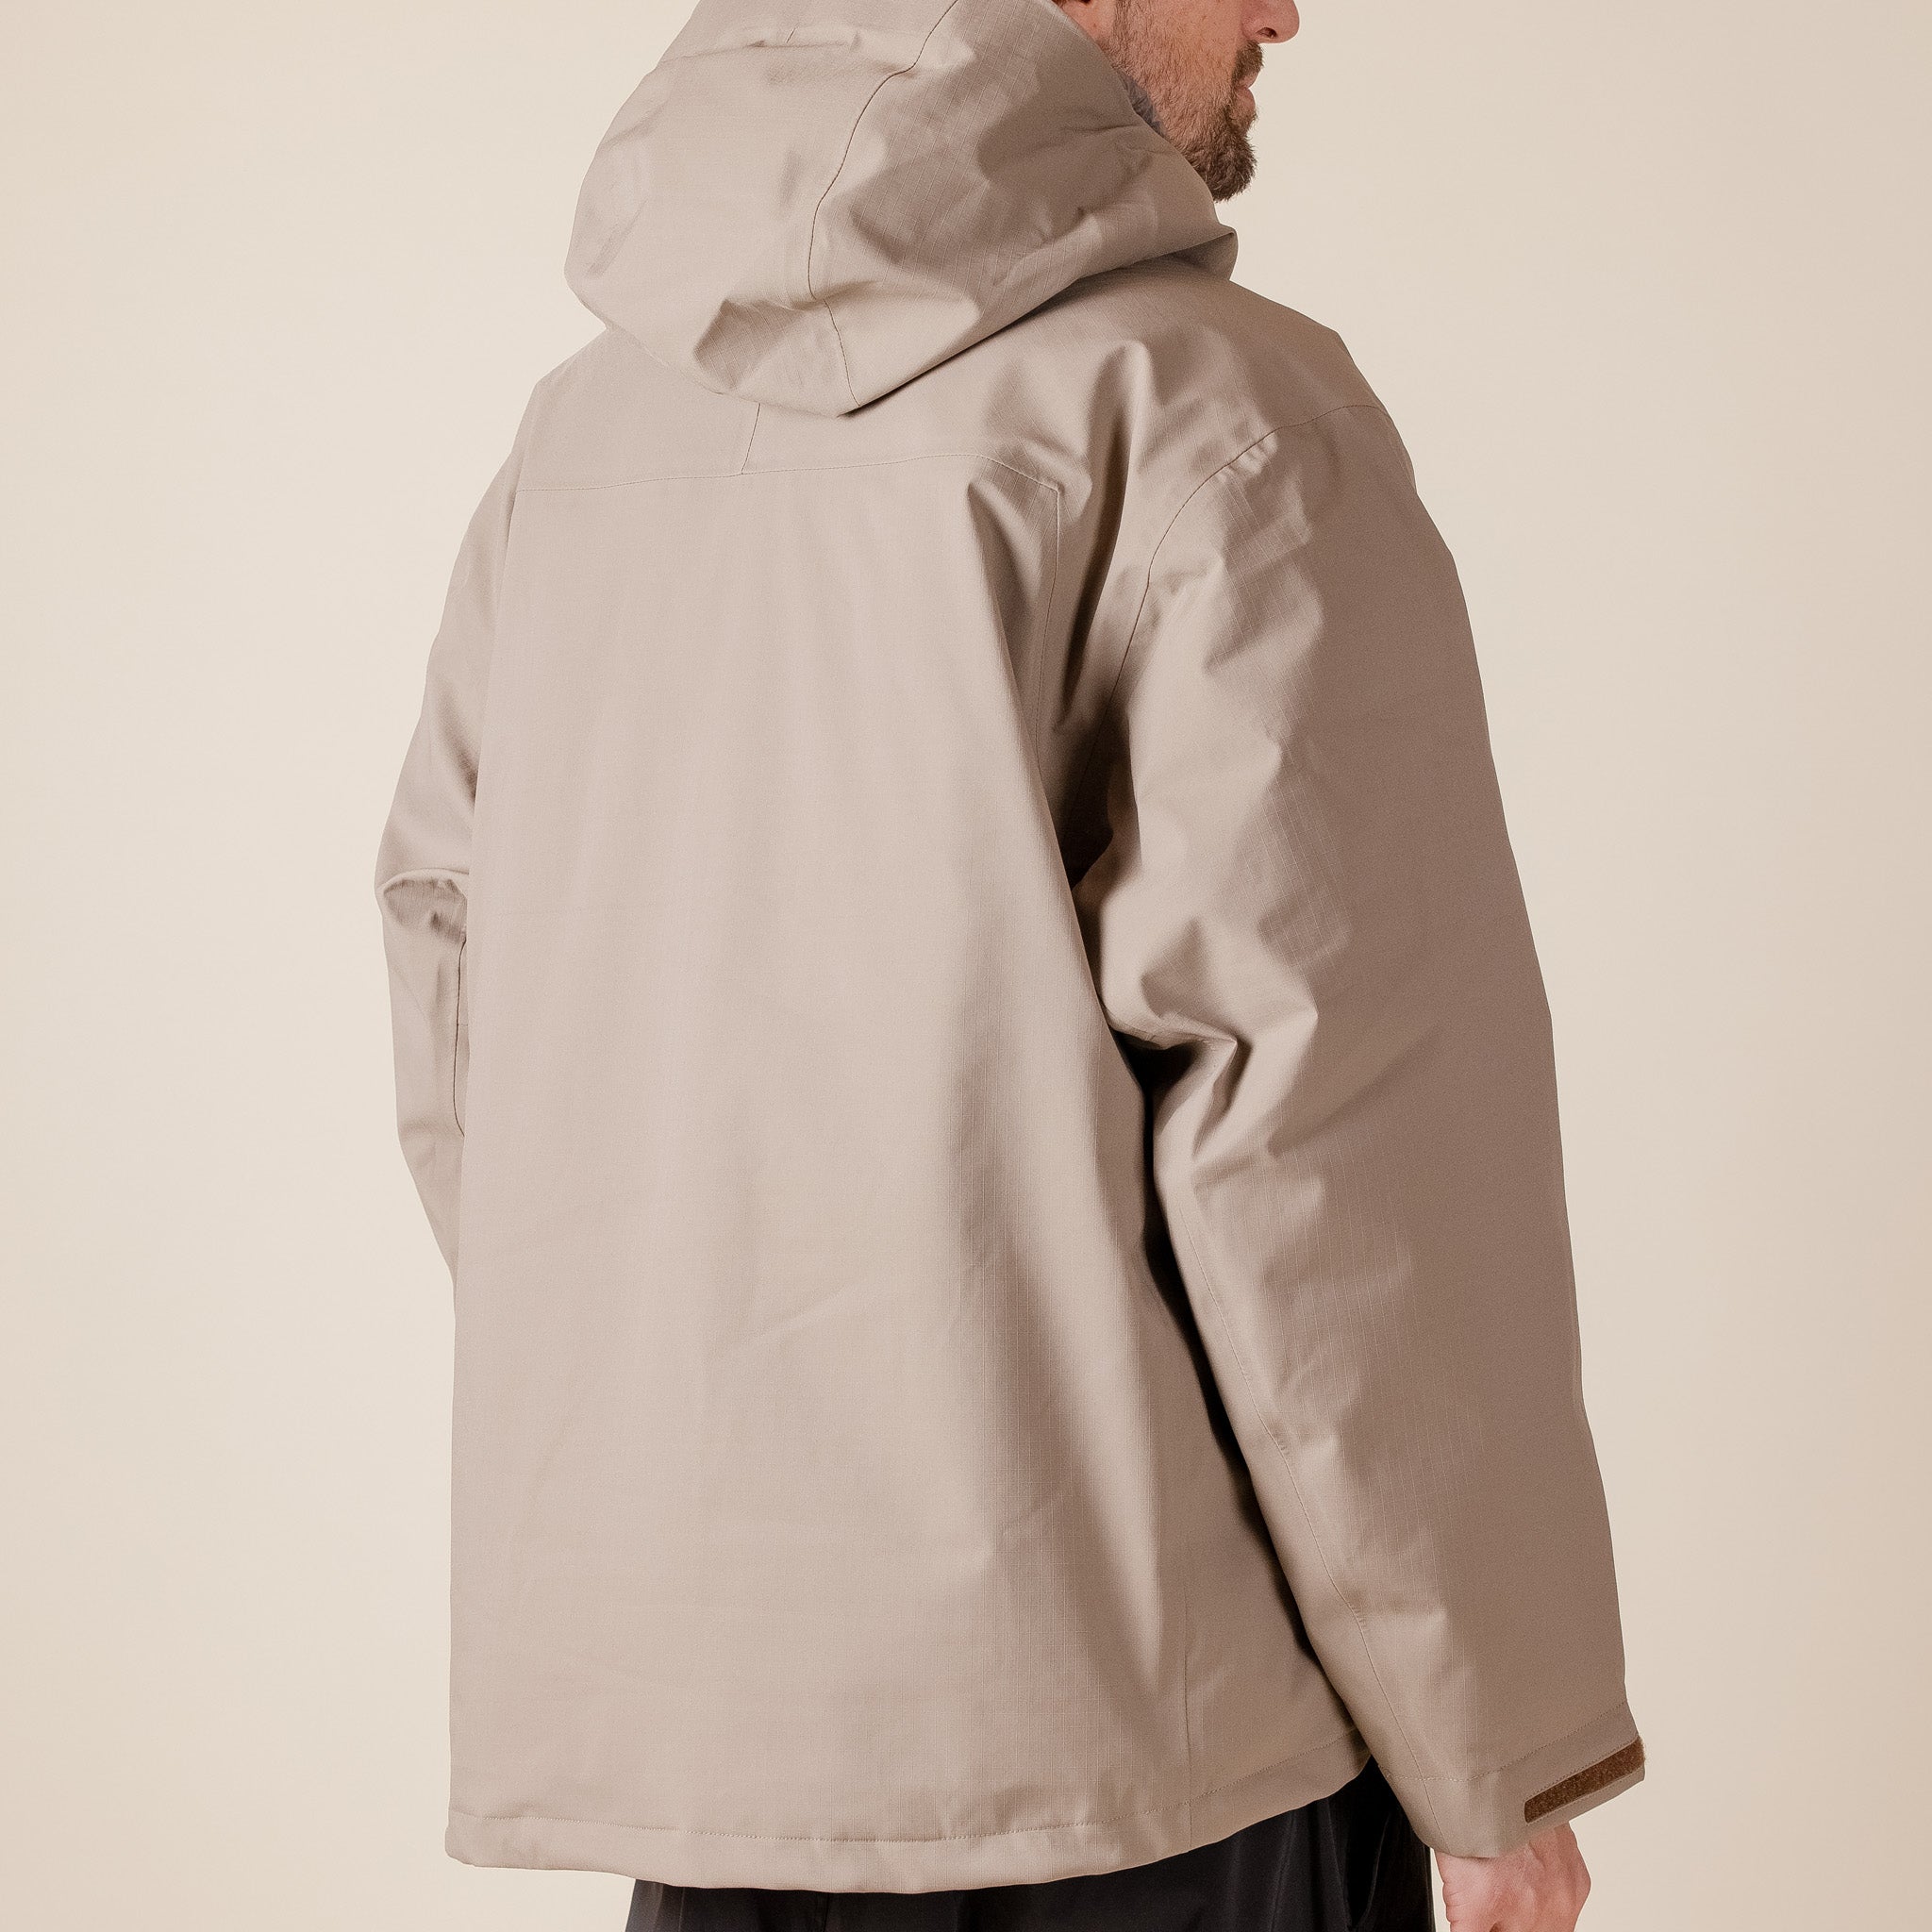 CMF Comfy Outdoor Garment - AR Guide Down L7 Coexist Jacket